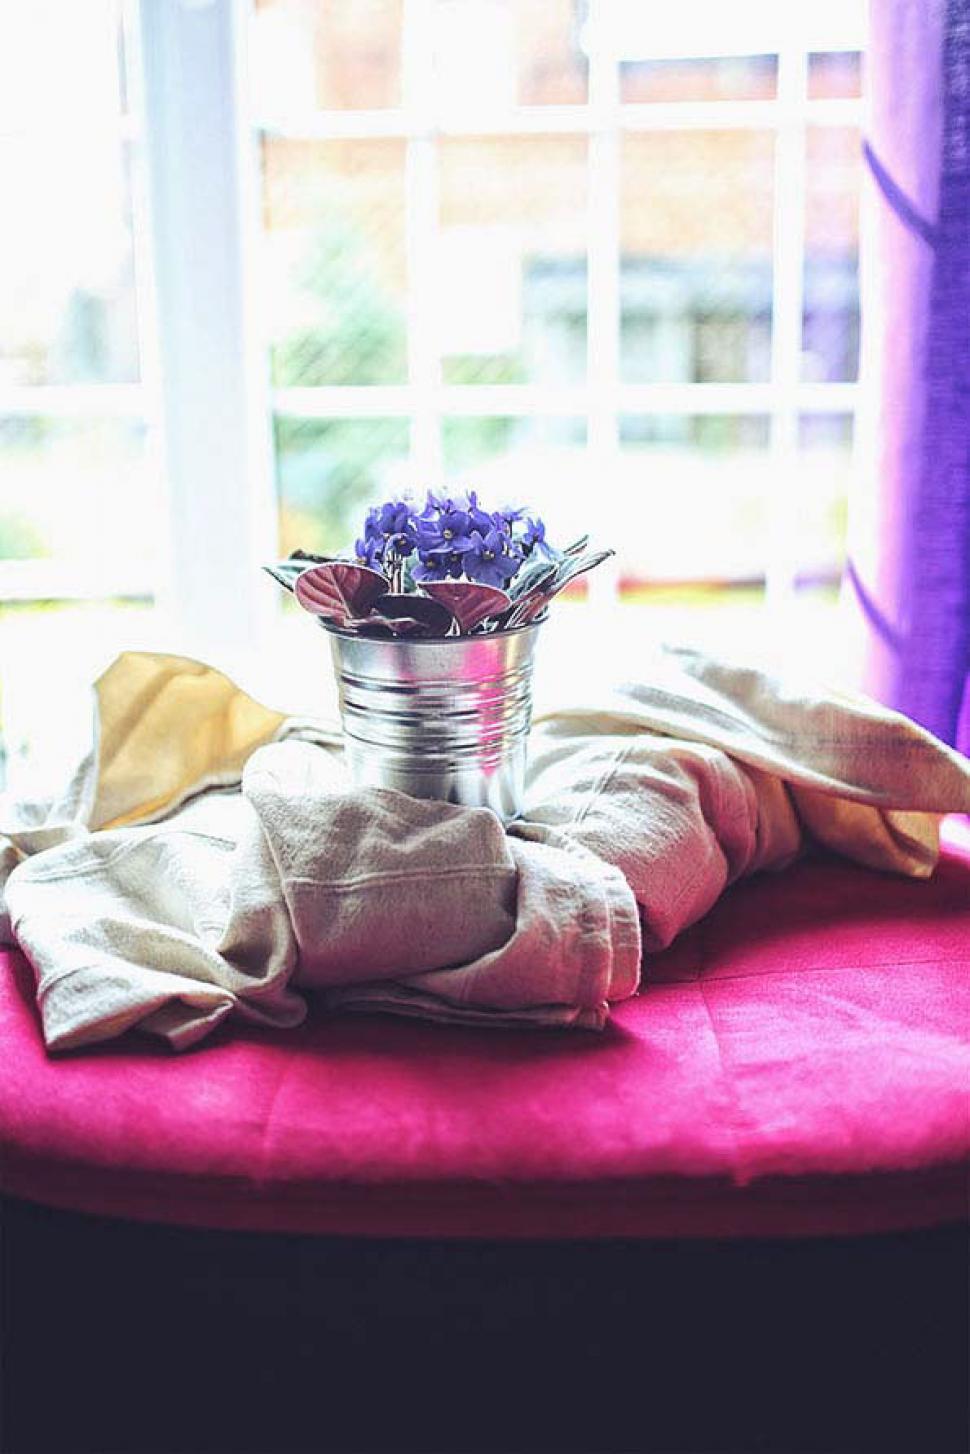 Free Image of Purple Flowers in Vase on Table 